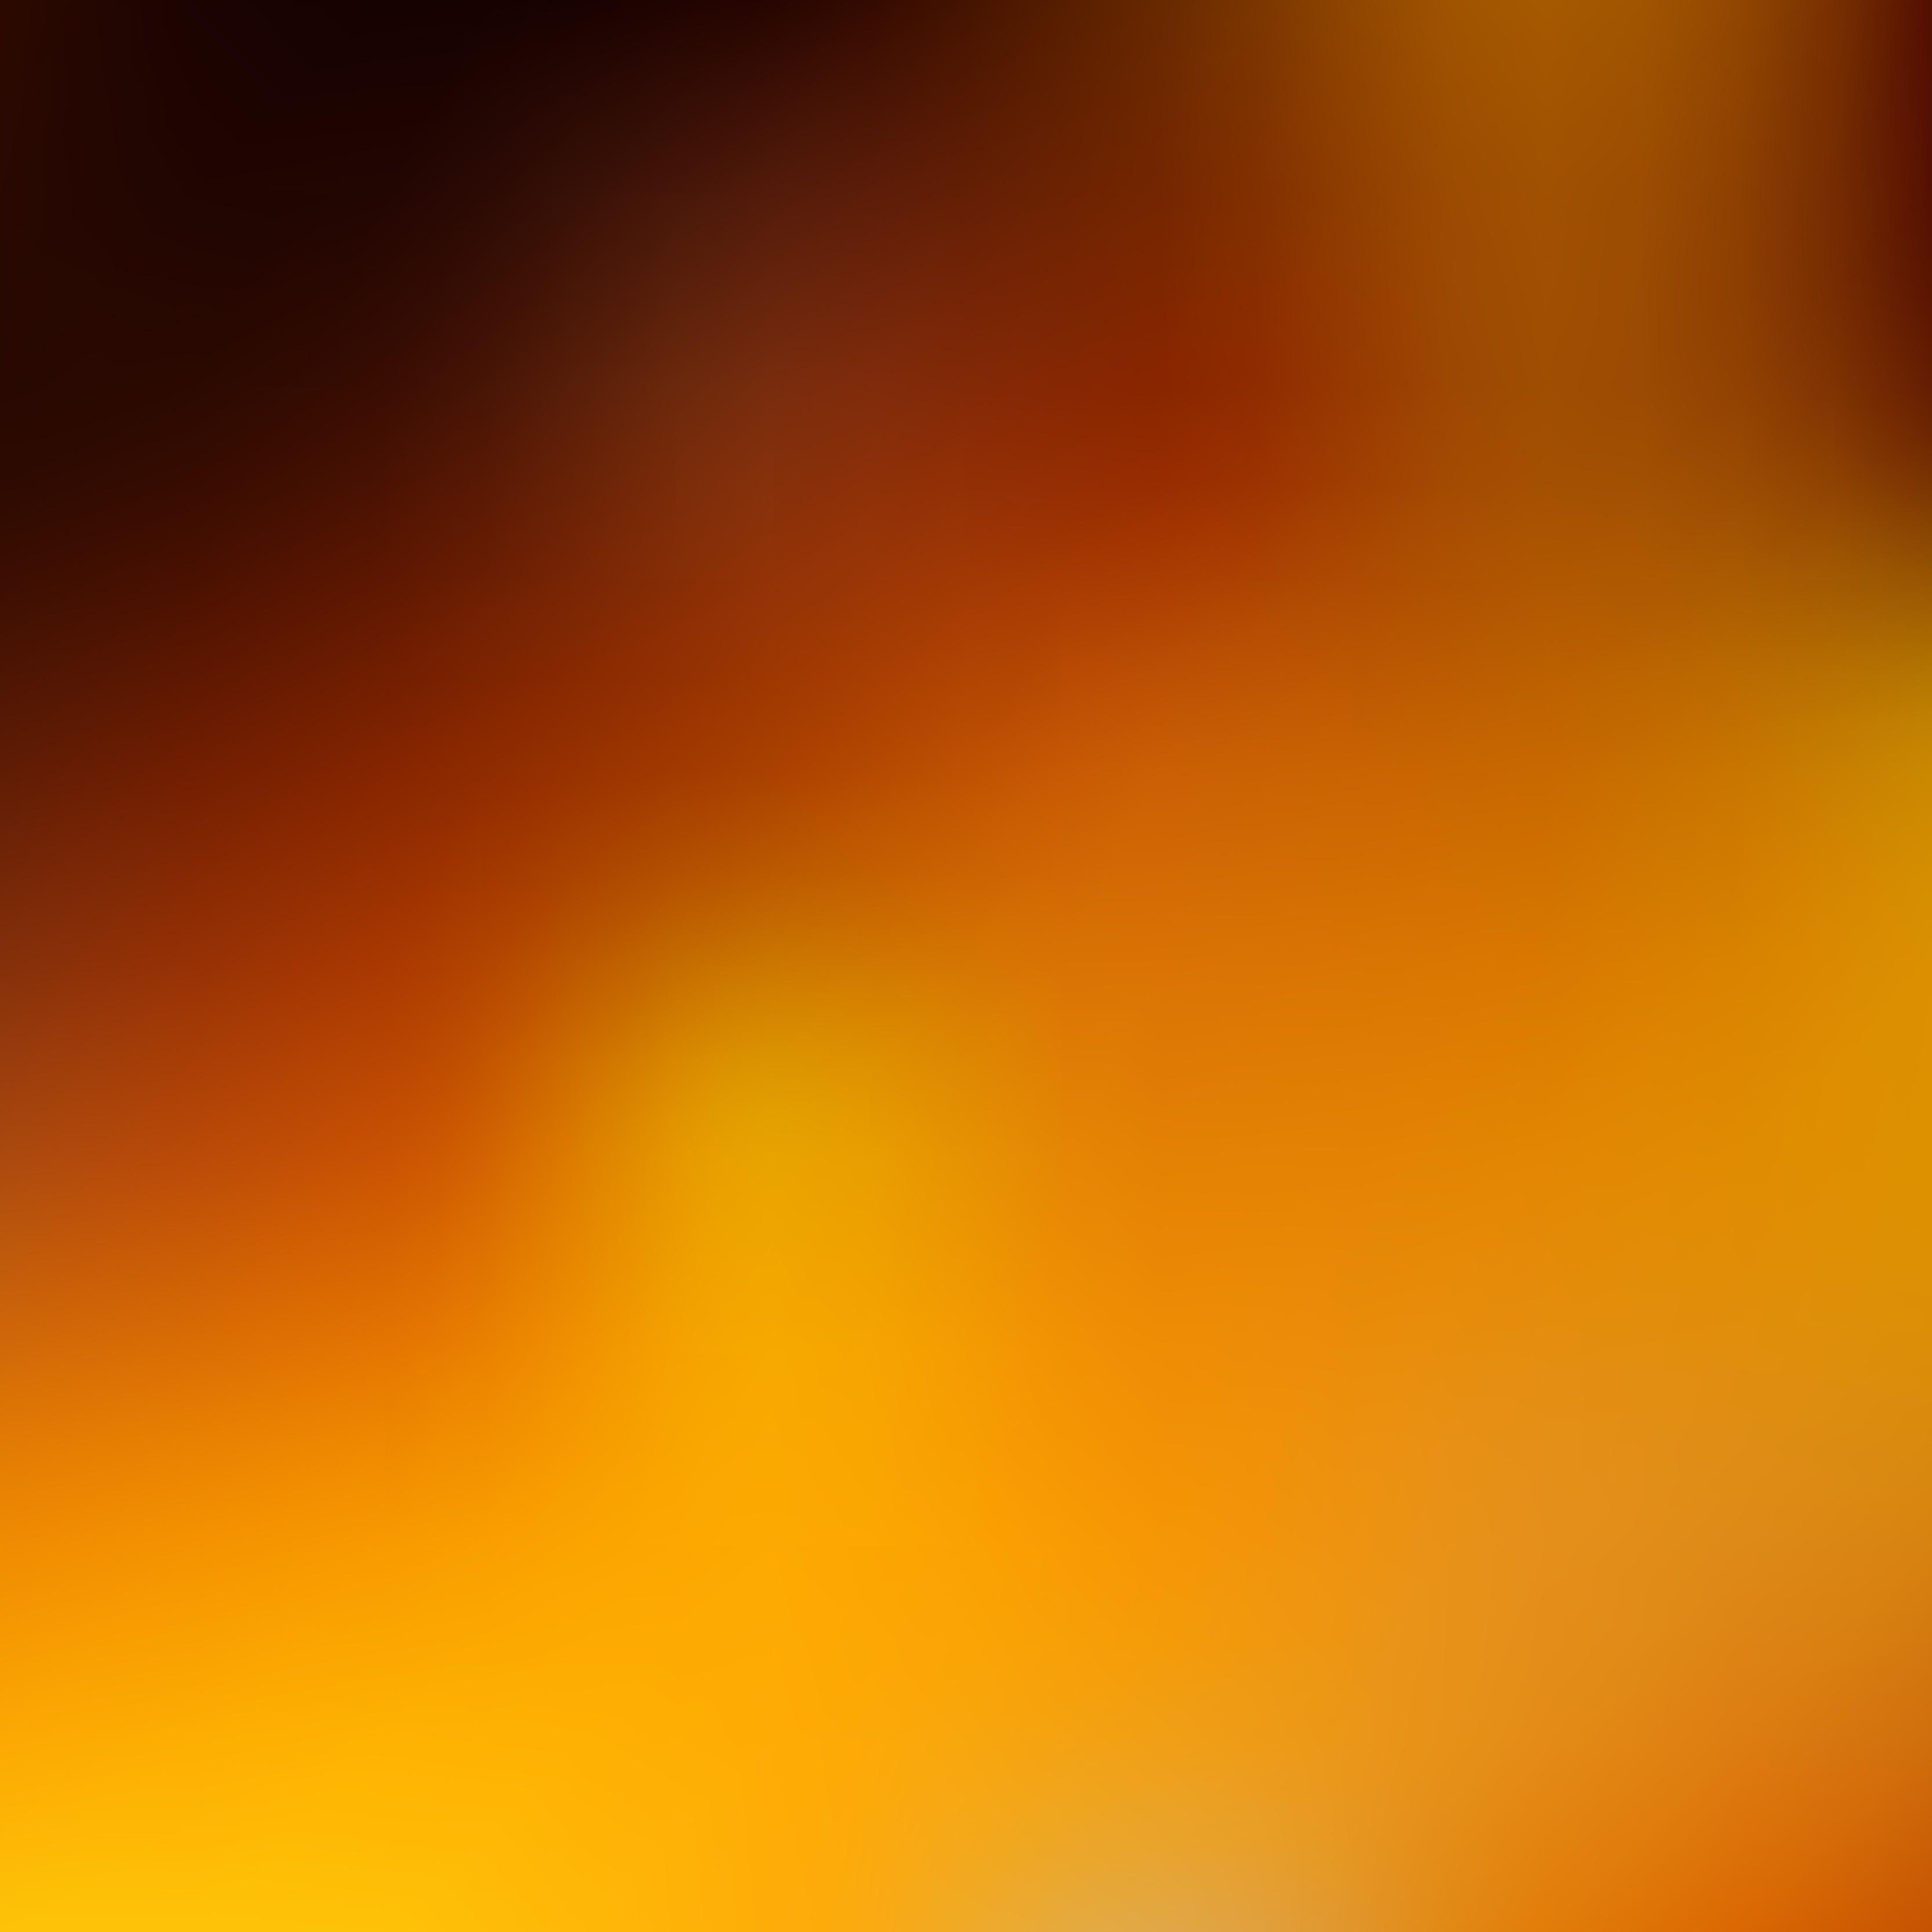 Blurred Flame Orange Color BackgroundFreevectors